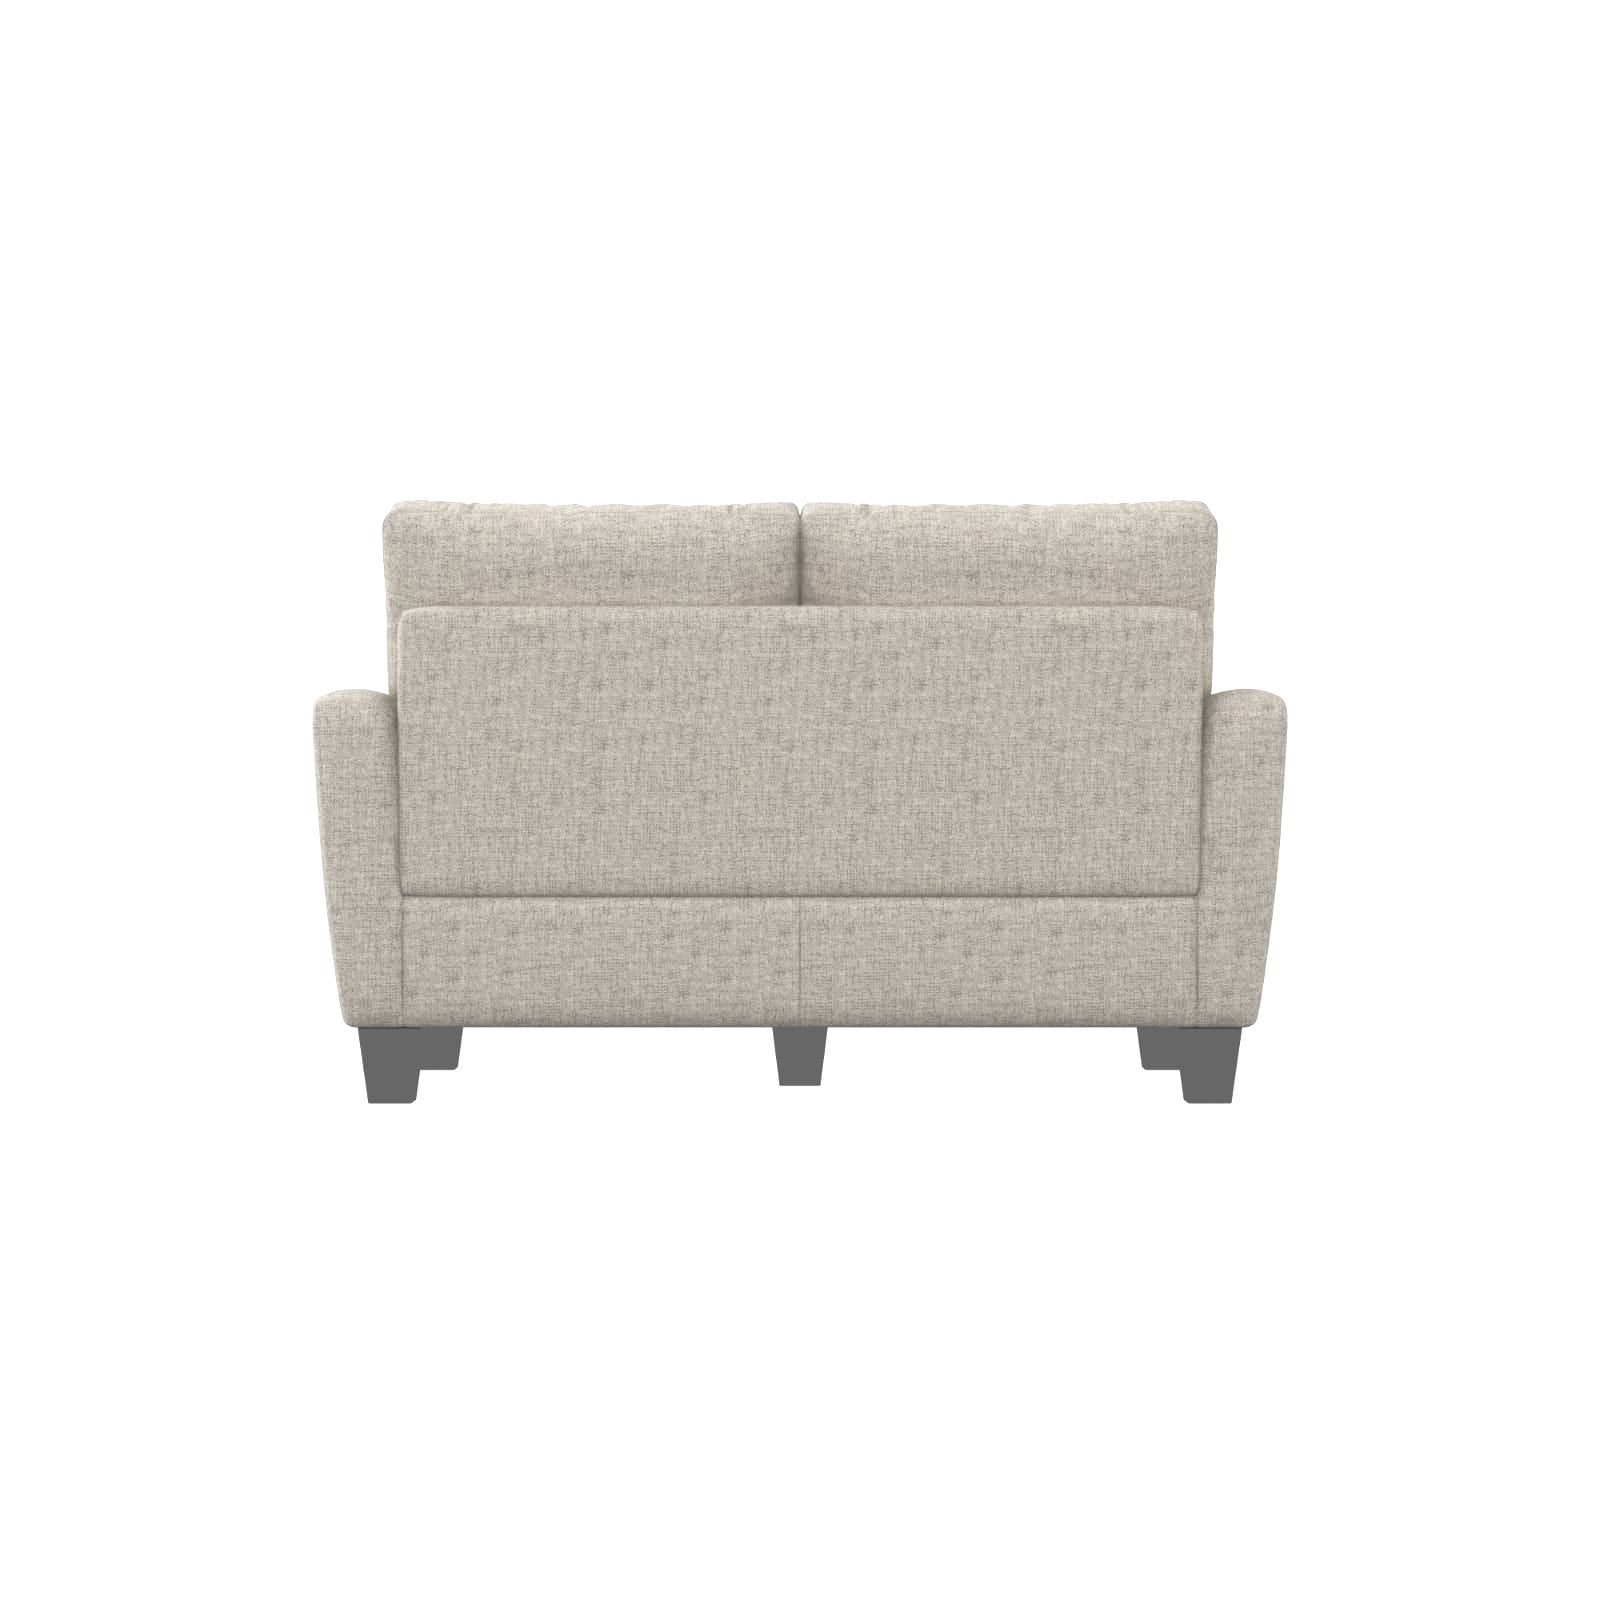 MB-2079 - 3-Seater Sofa w/ 2 Pillows - 47397